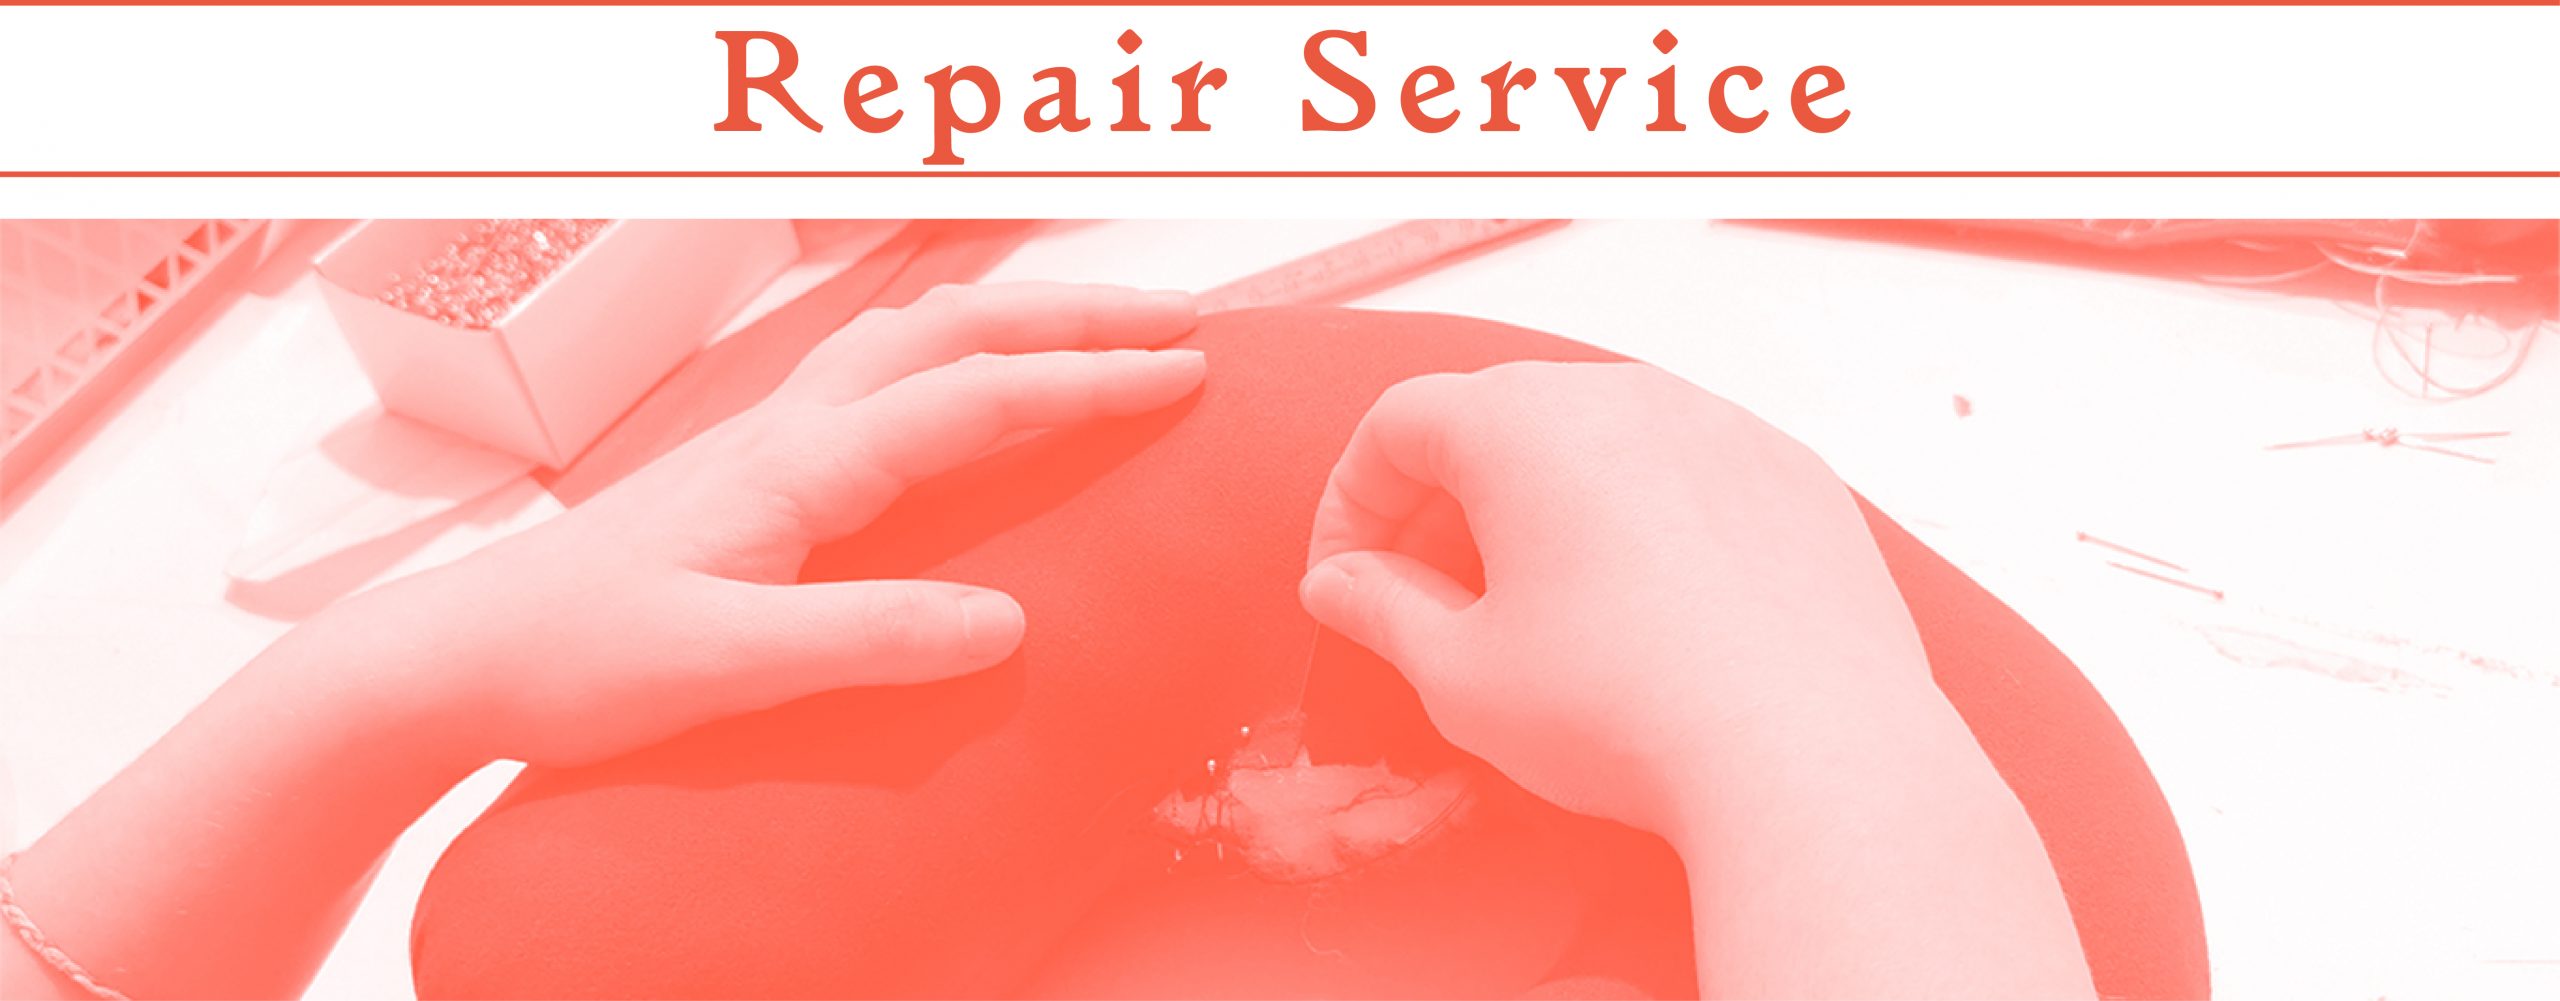 Aufschnitt Reparatur Service